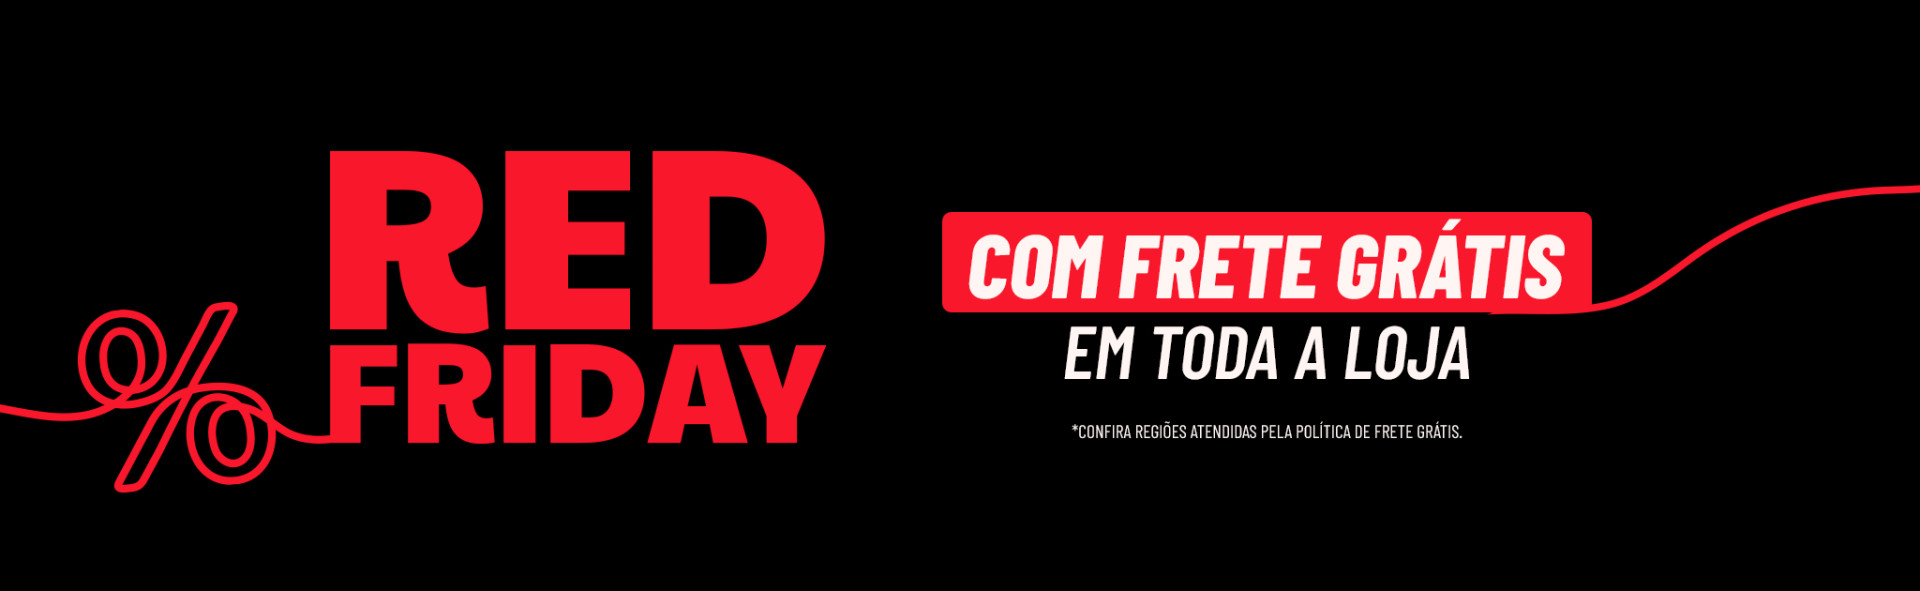 Red Friday + Frete Grátis